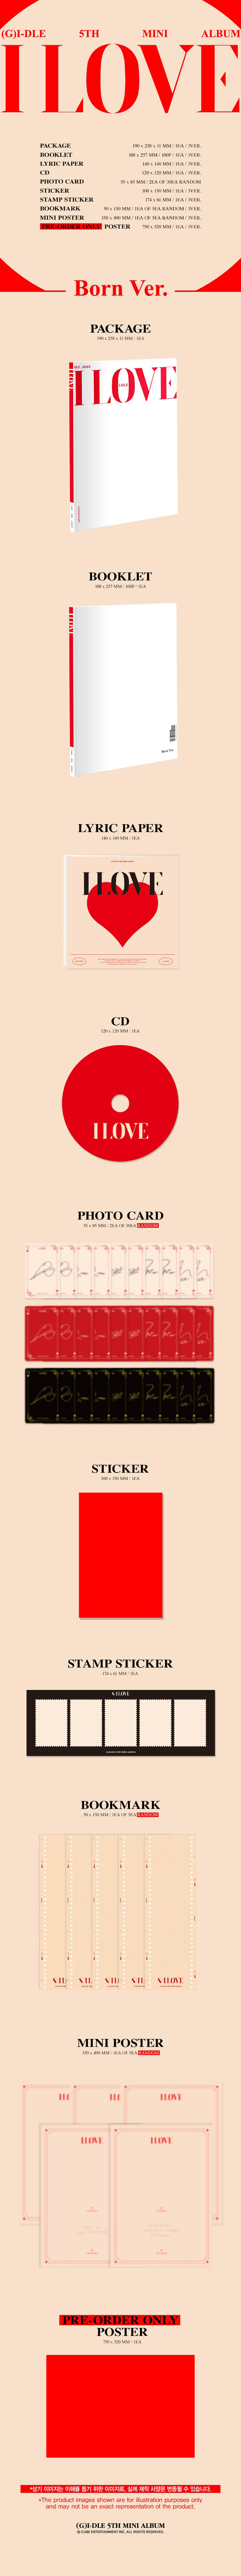 PhotoBook Ver.) (G)I-DLE (GIDLE) - 6th mini album [I feel] - Kmall24